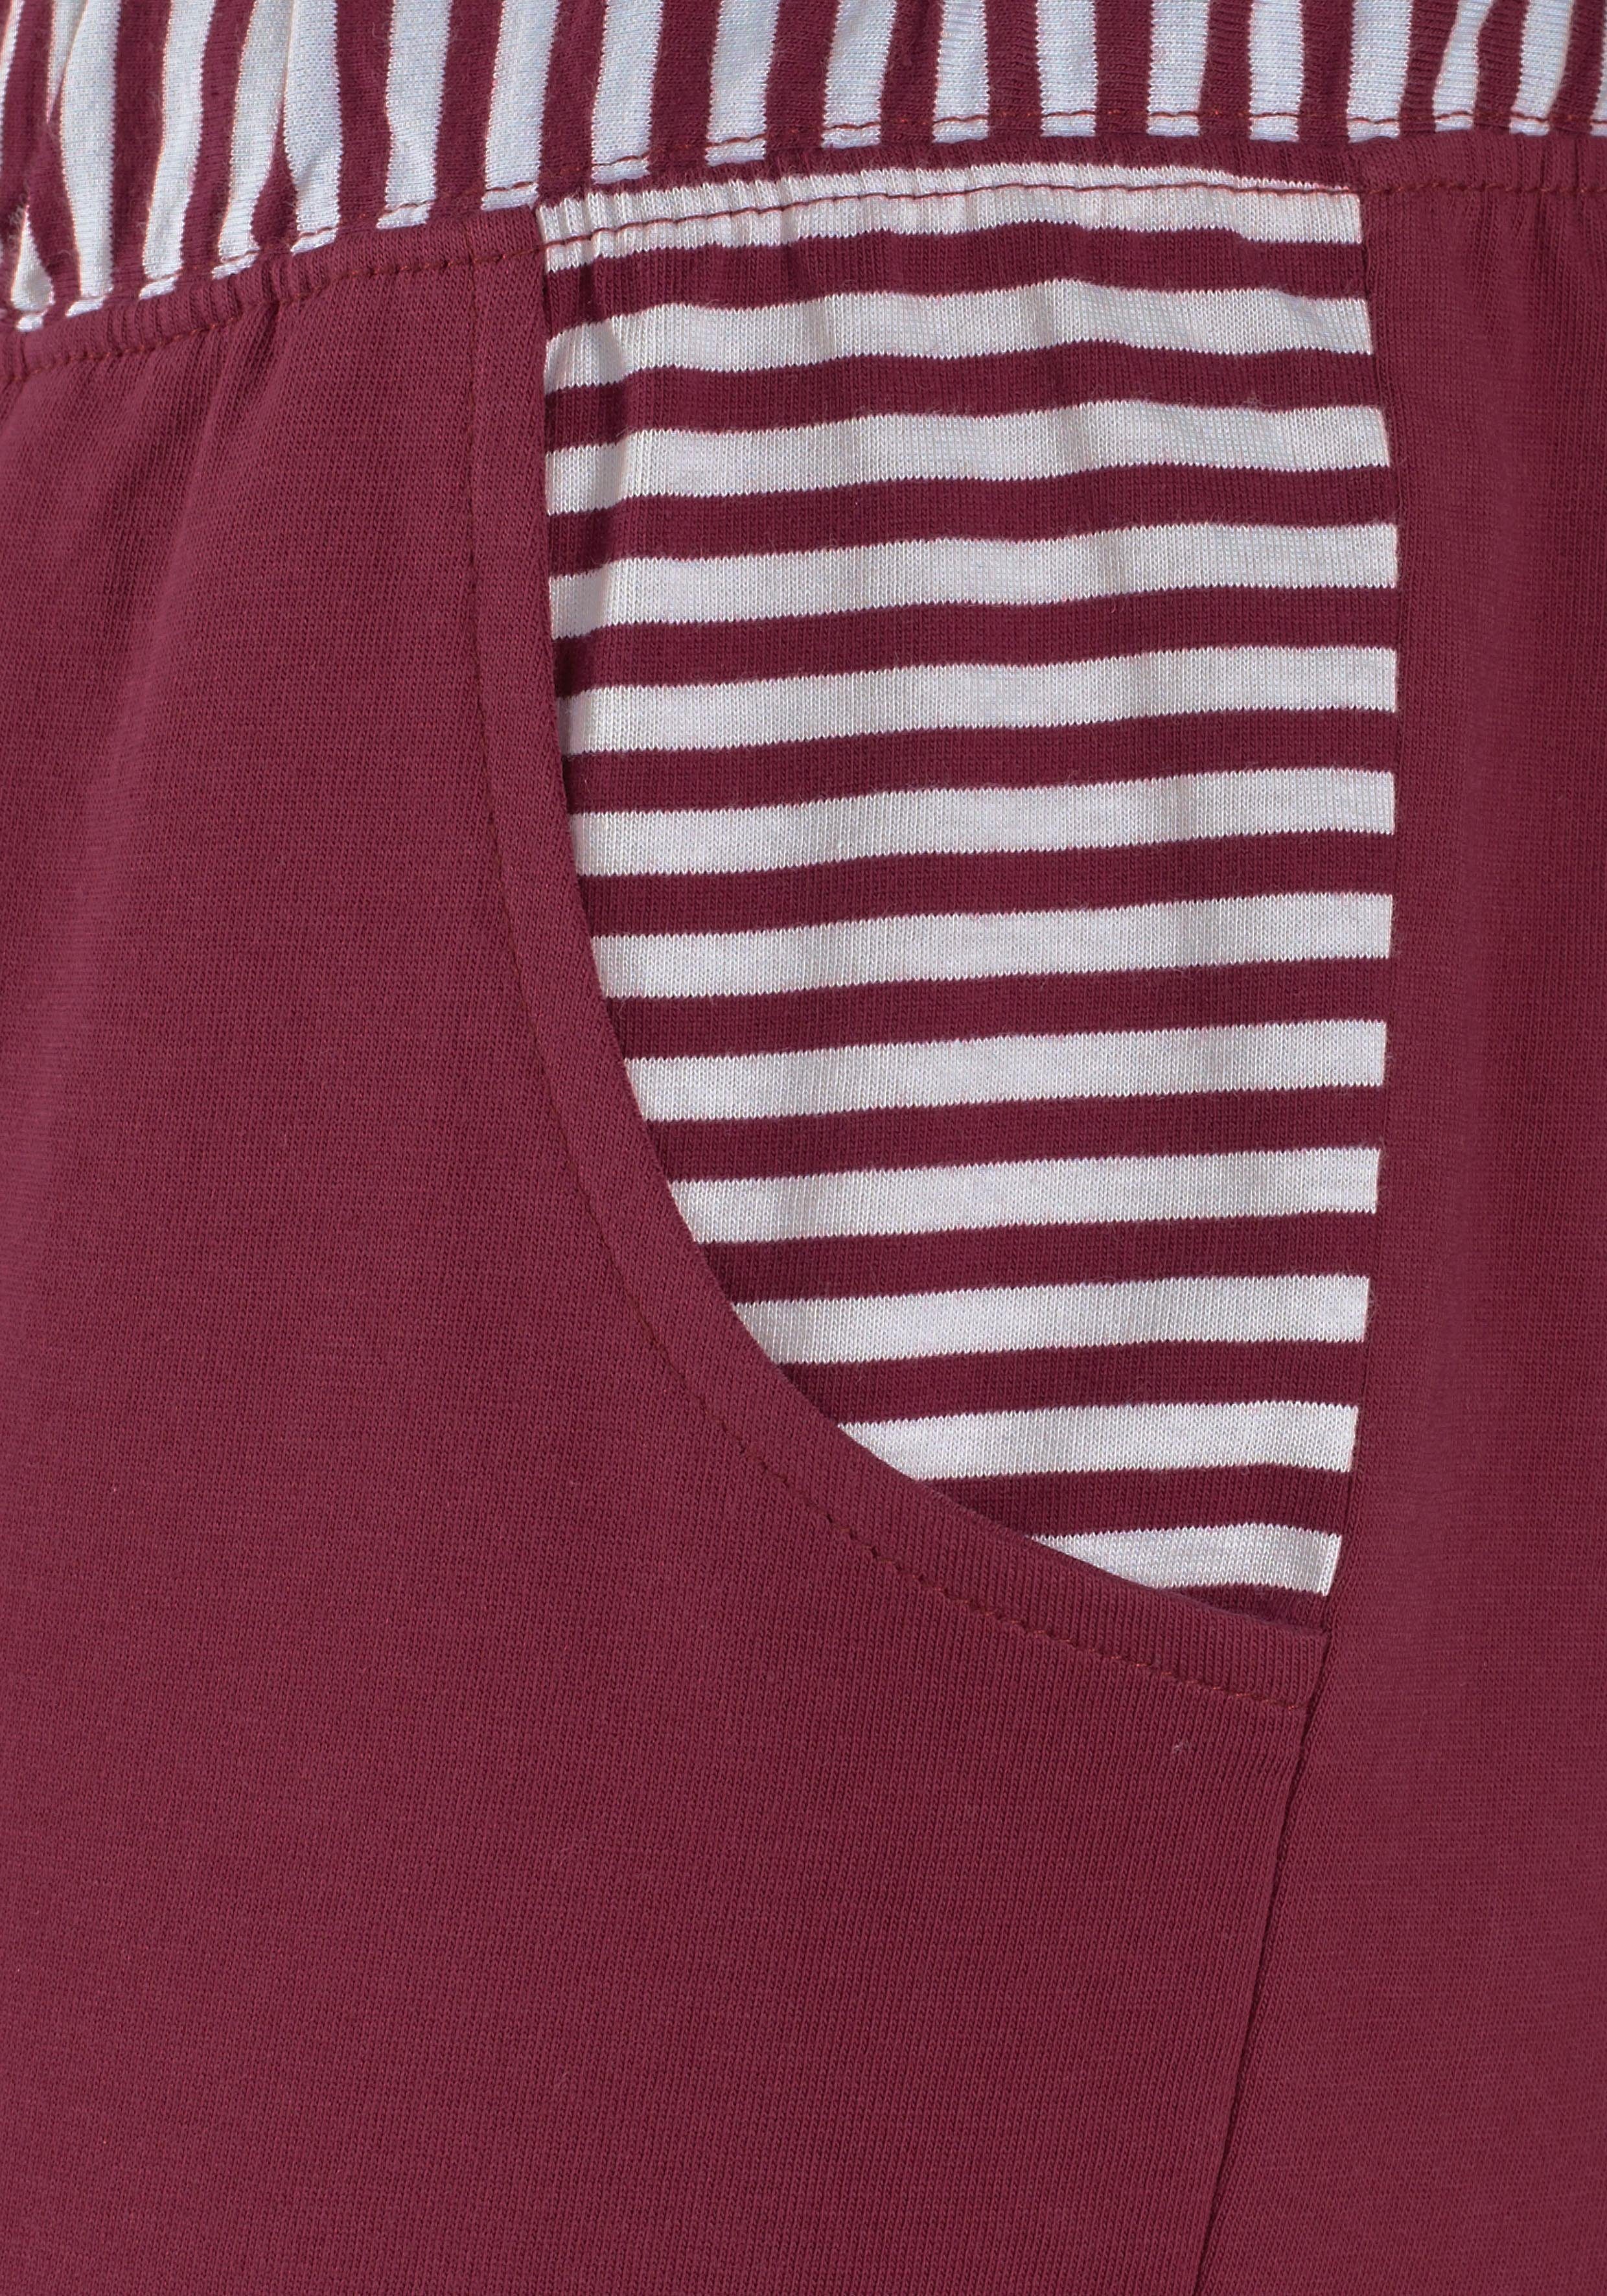 und bordeaux-gestreift tlg., 1 legerer Hose Stück) H.I.S (2 geringeltem Capri-Pyjama mit T-Shirt